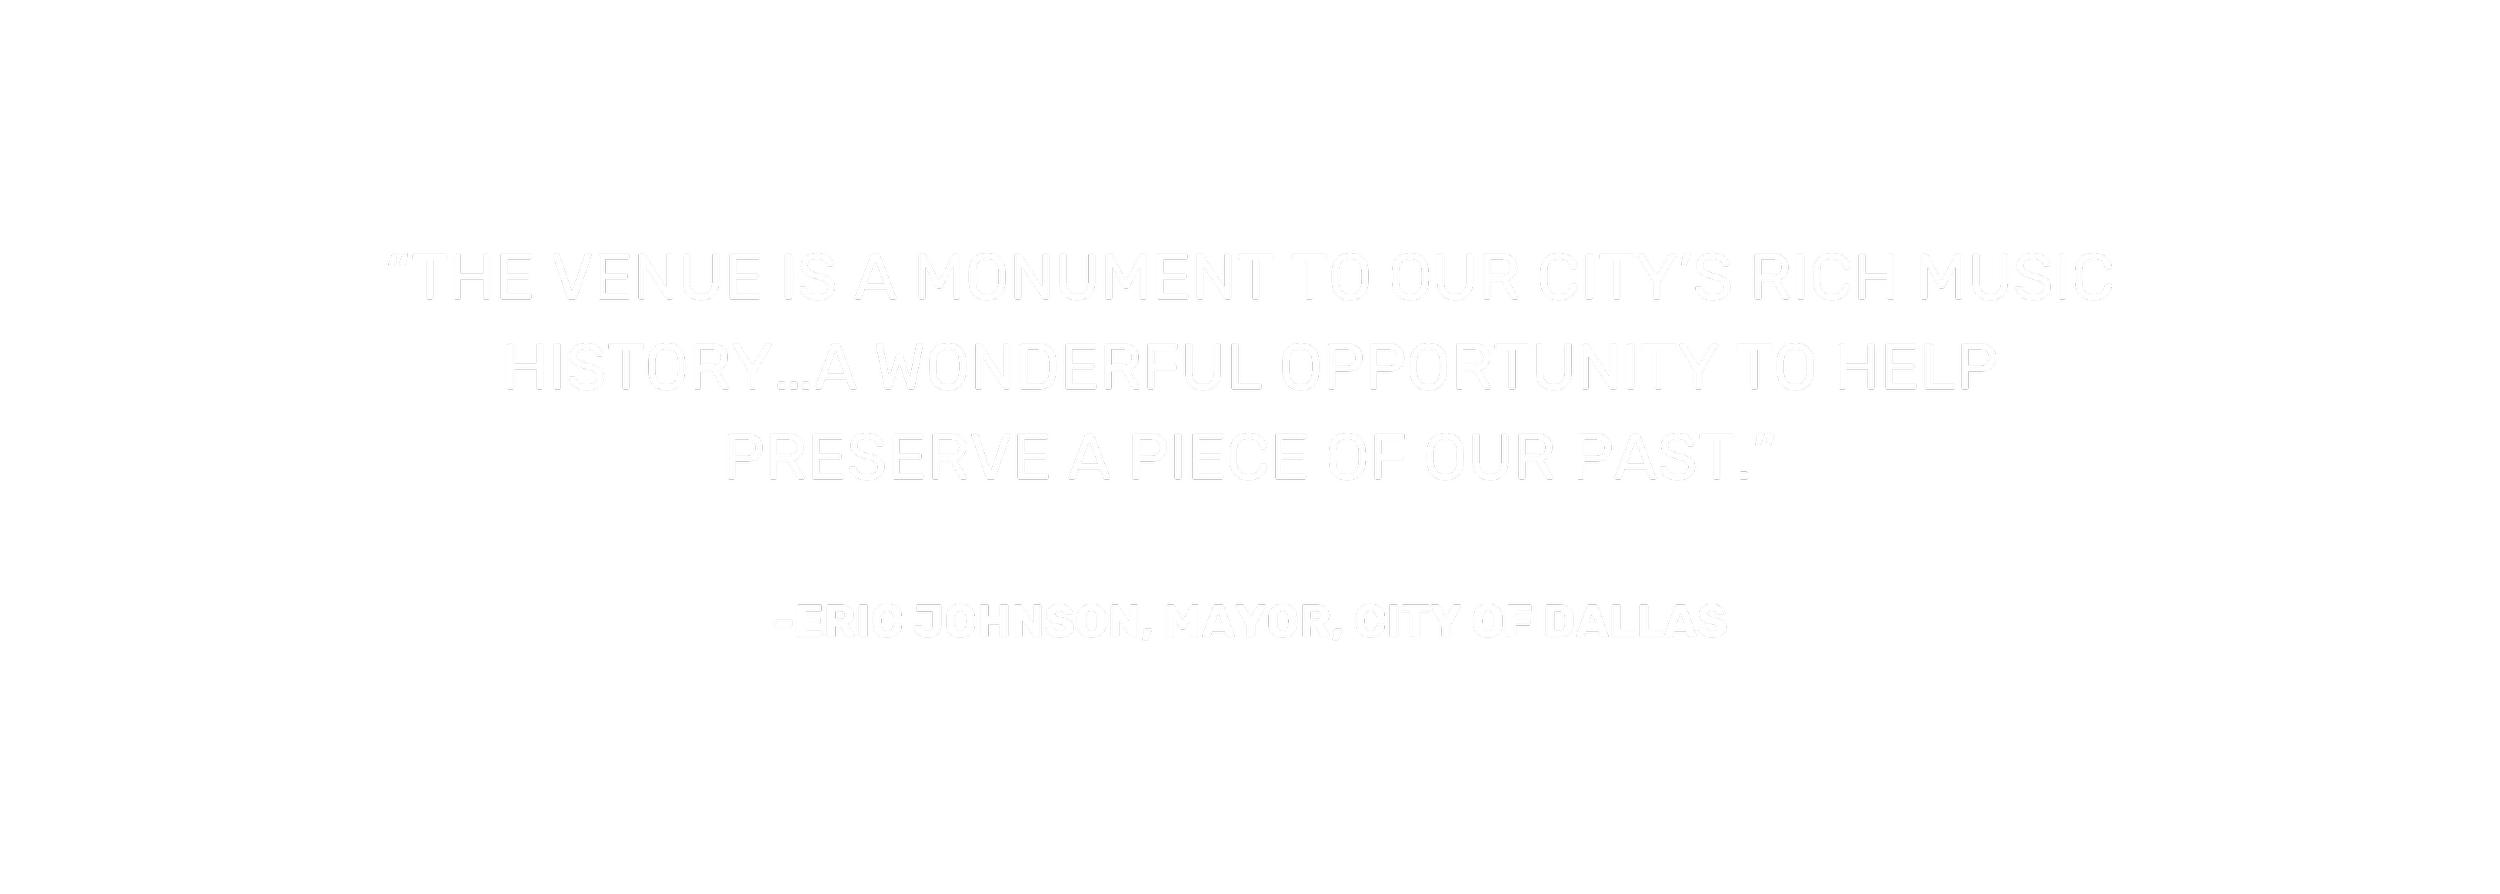 Eric Johnson, Mayor, City of Dallas